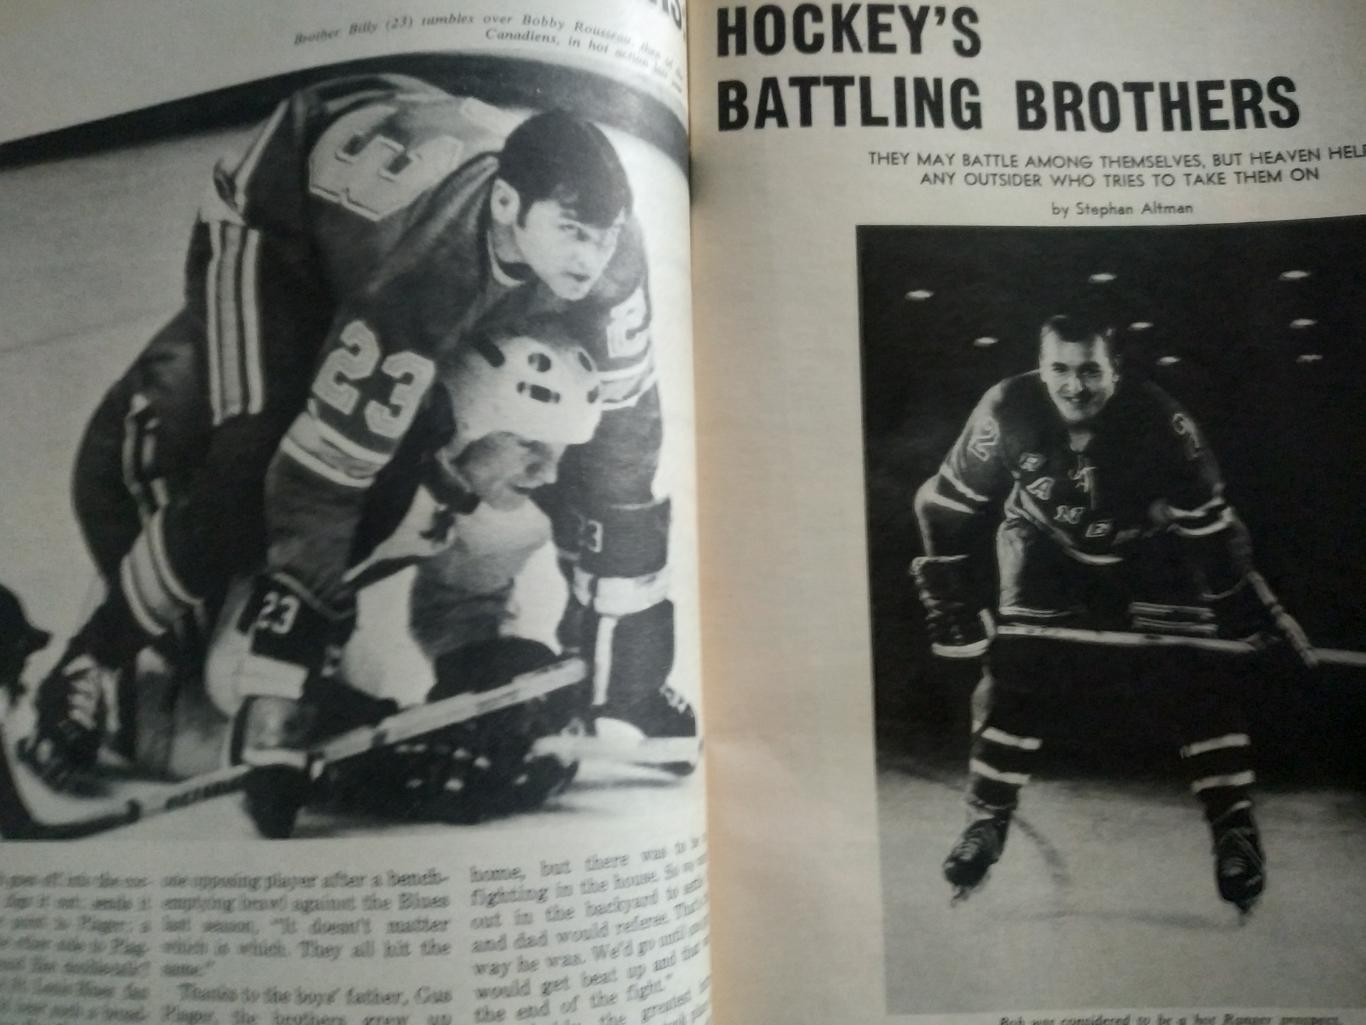 ЖУРНАЛ НХЛ СПОРТ СПЕШИАЛ ХОККЕЙ APR 1971 NHL SPORTS SPECIAL HOCKEY 5